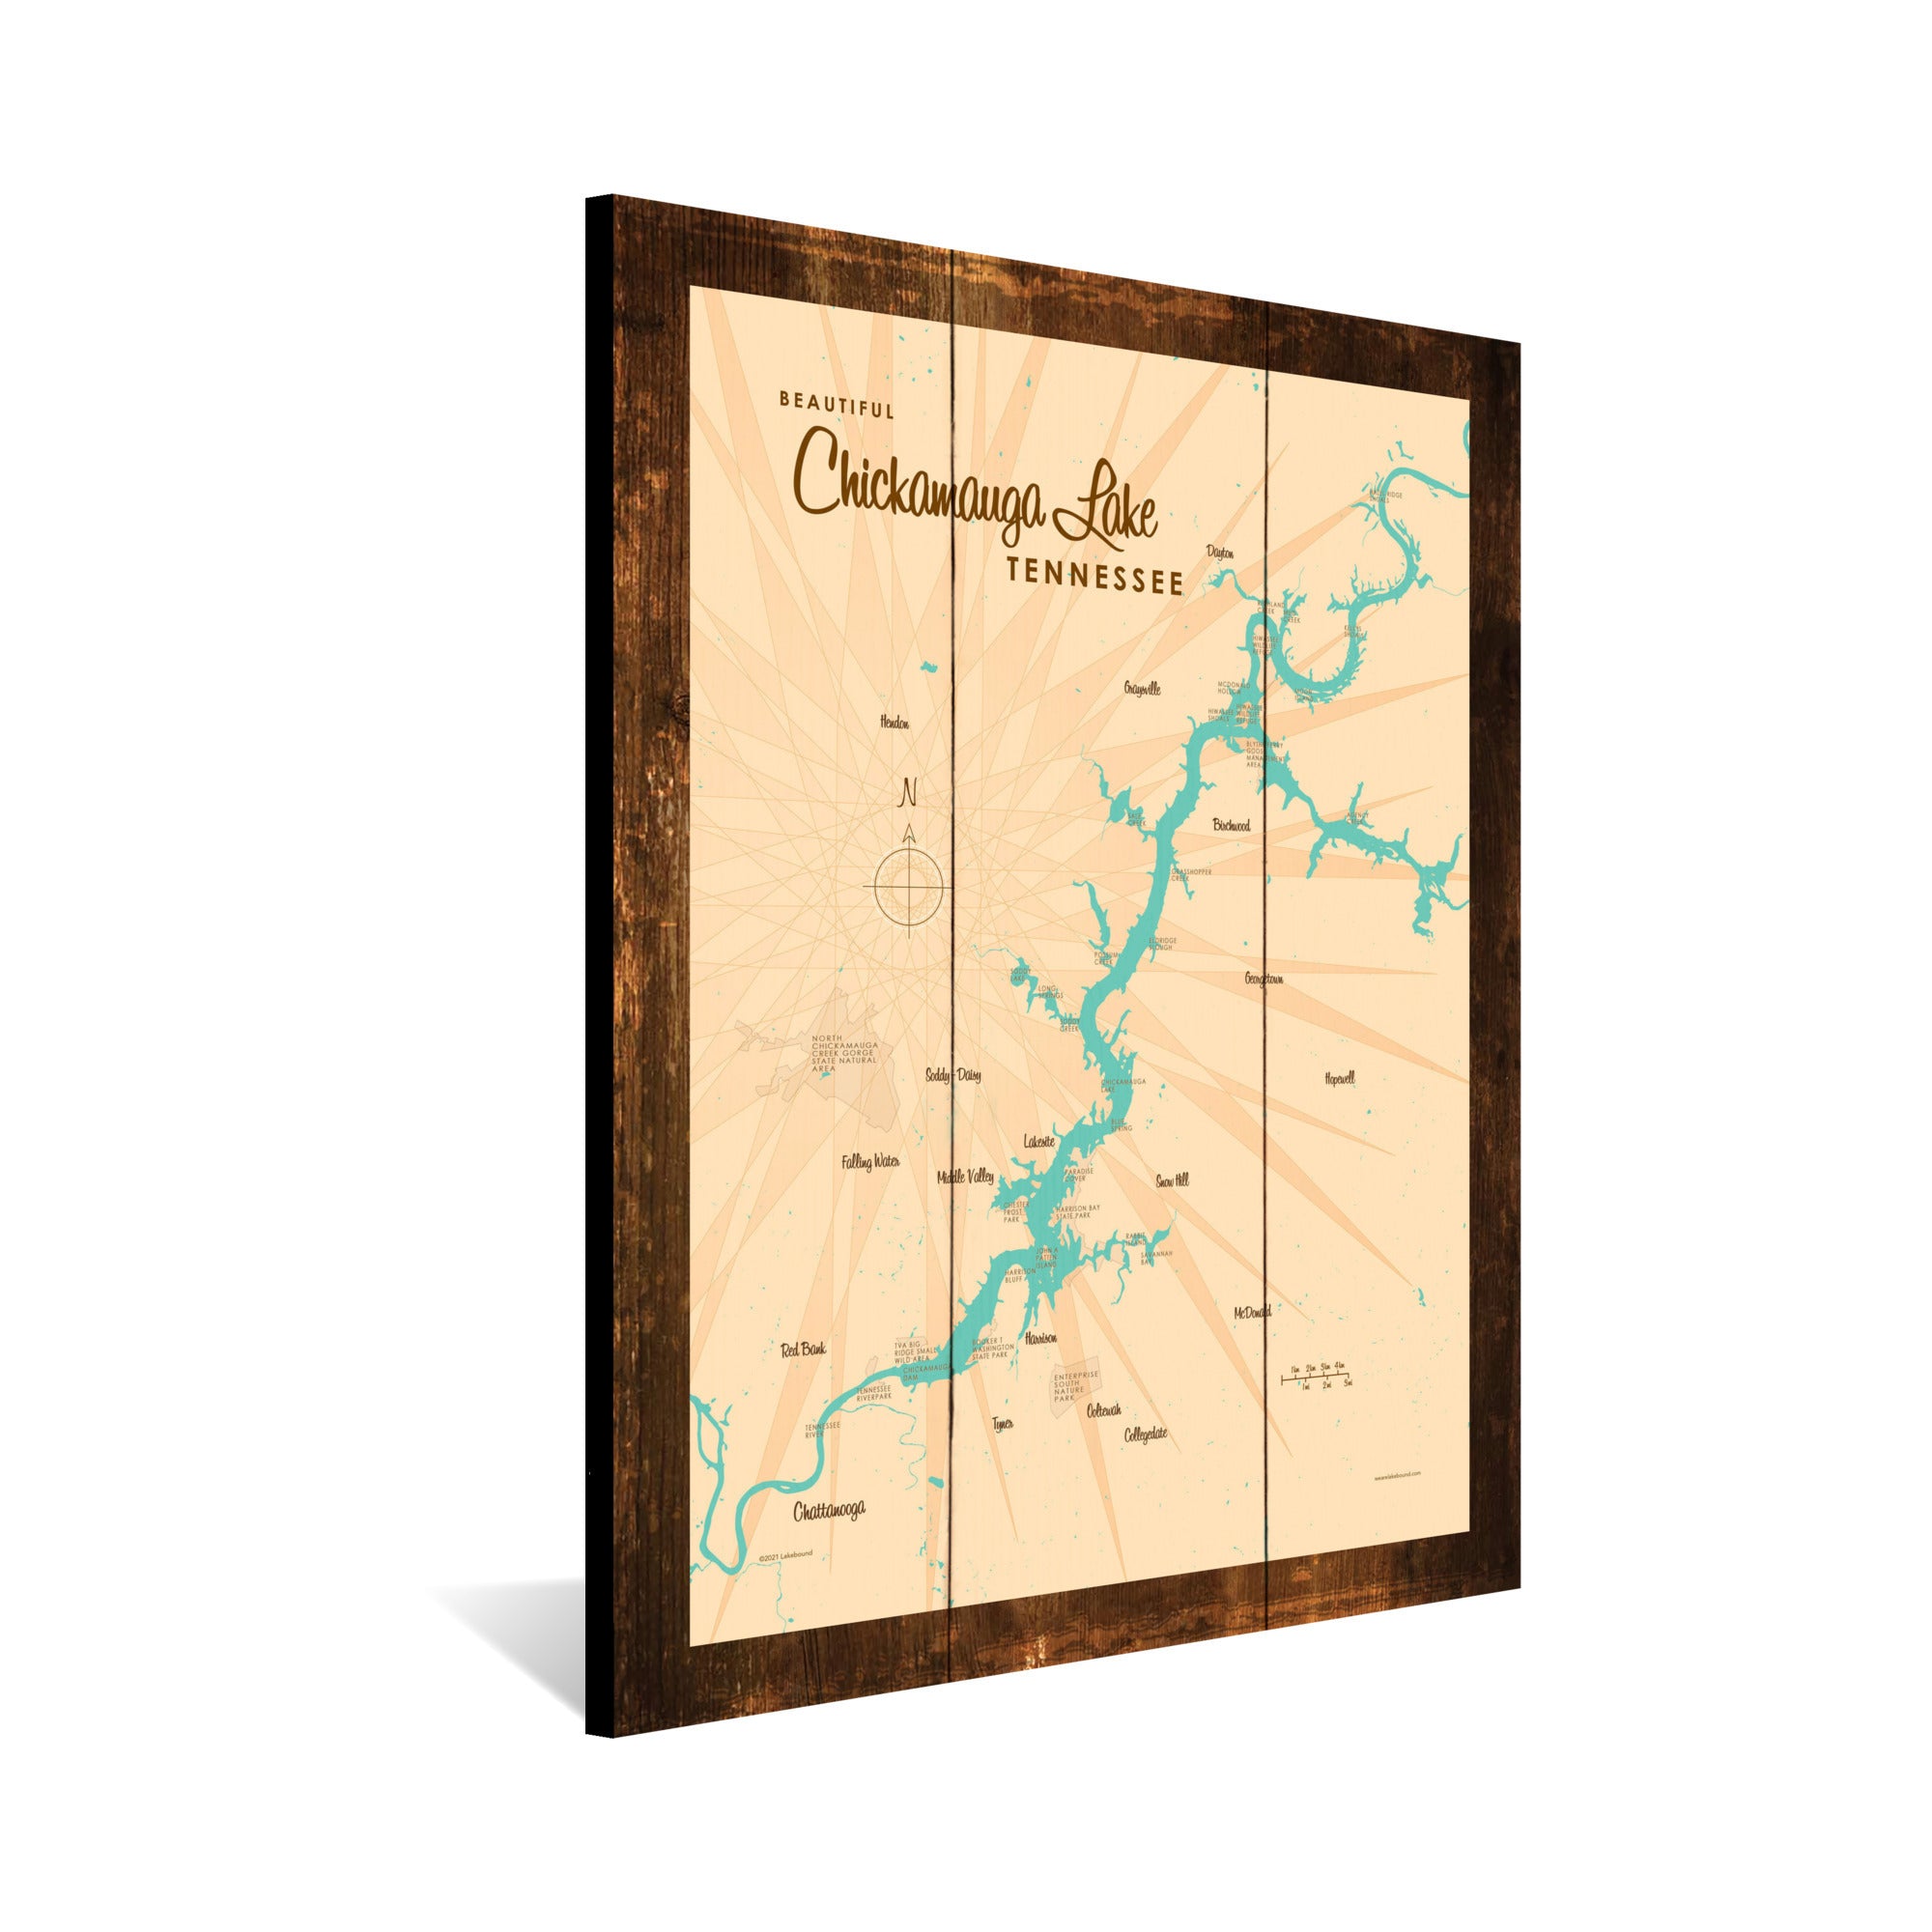 Chickamauga Lake Tennessee, Rustic Wood Sign Map Art